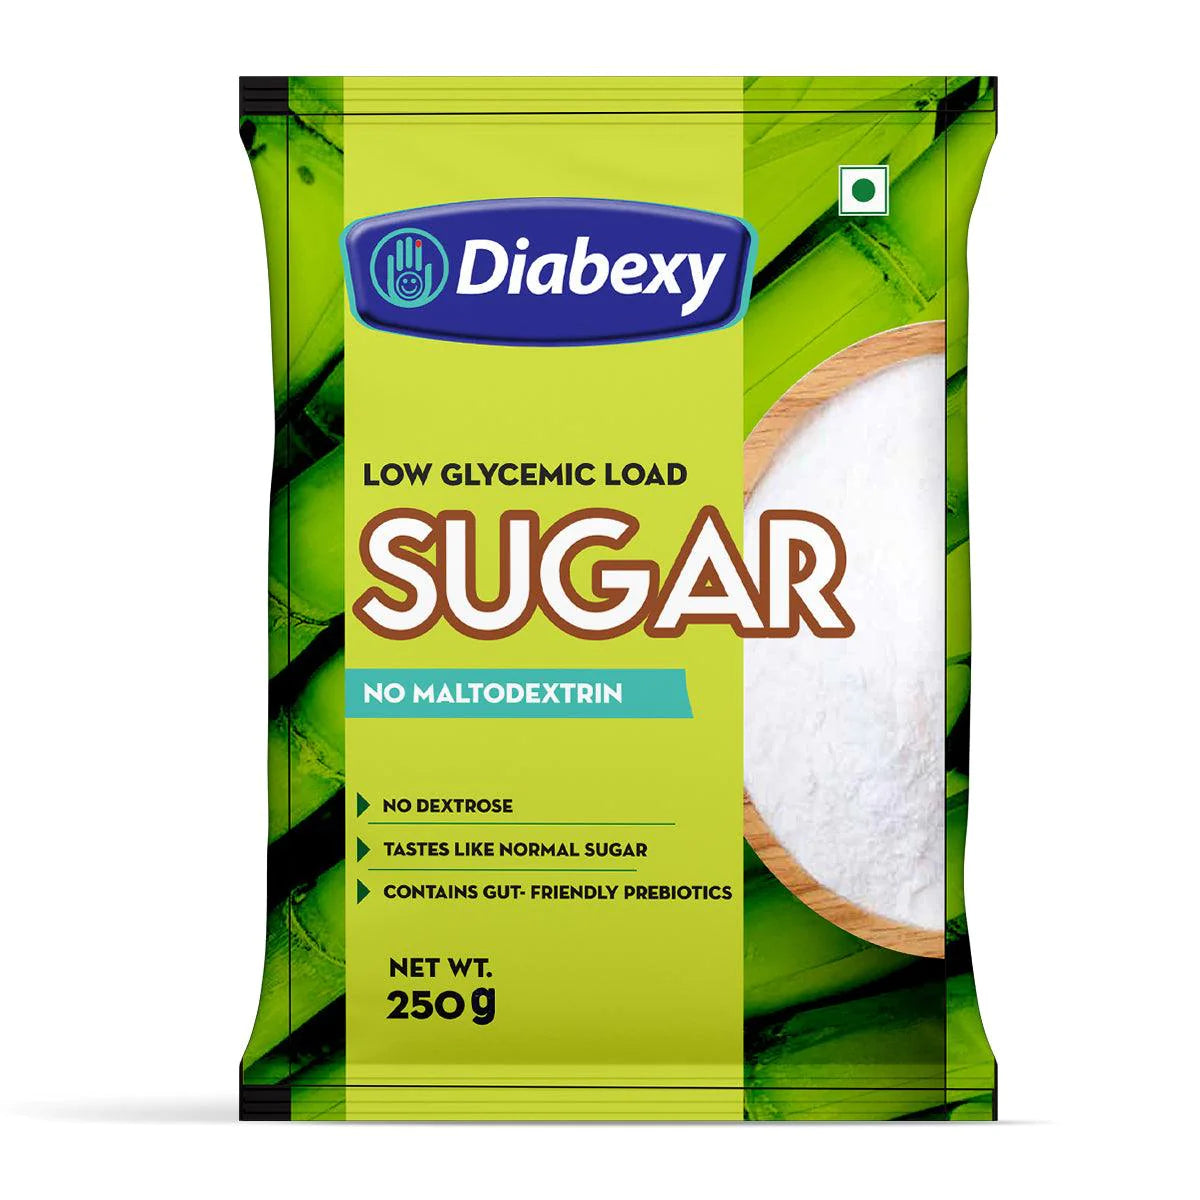 Diabexy Sugar Free Sweetener - BUDNE